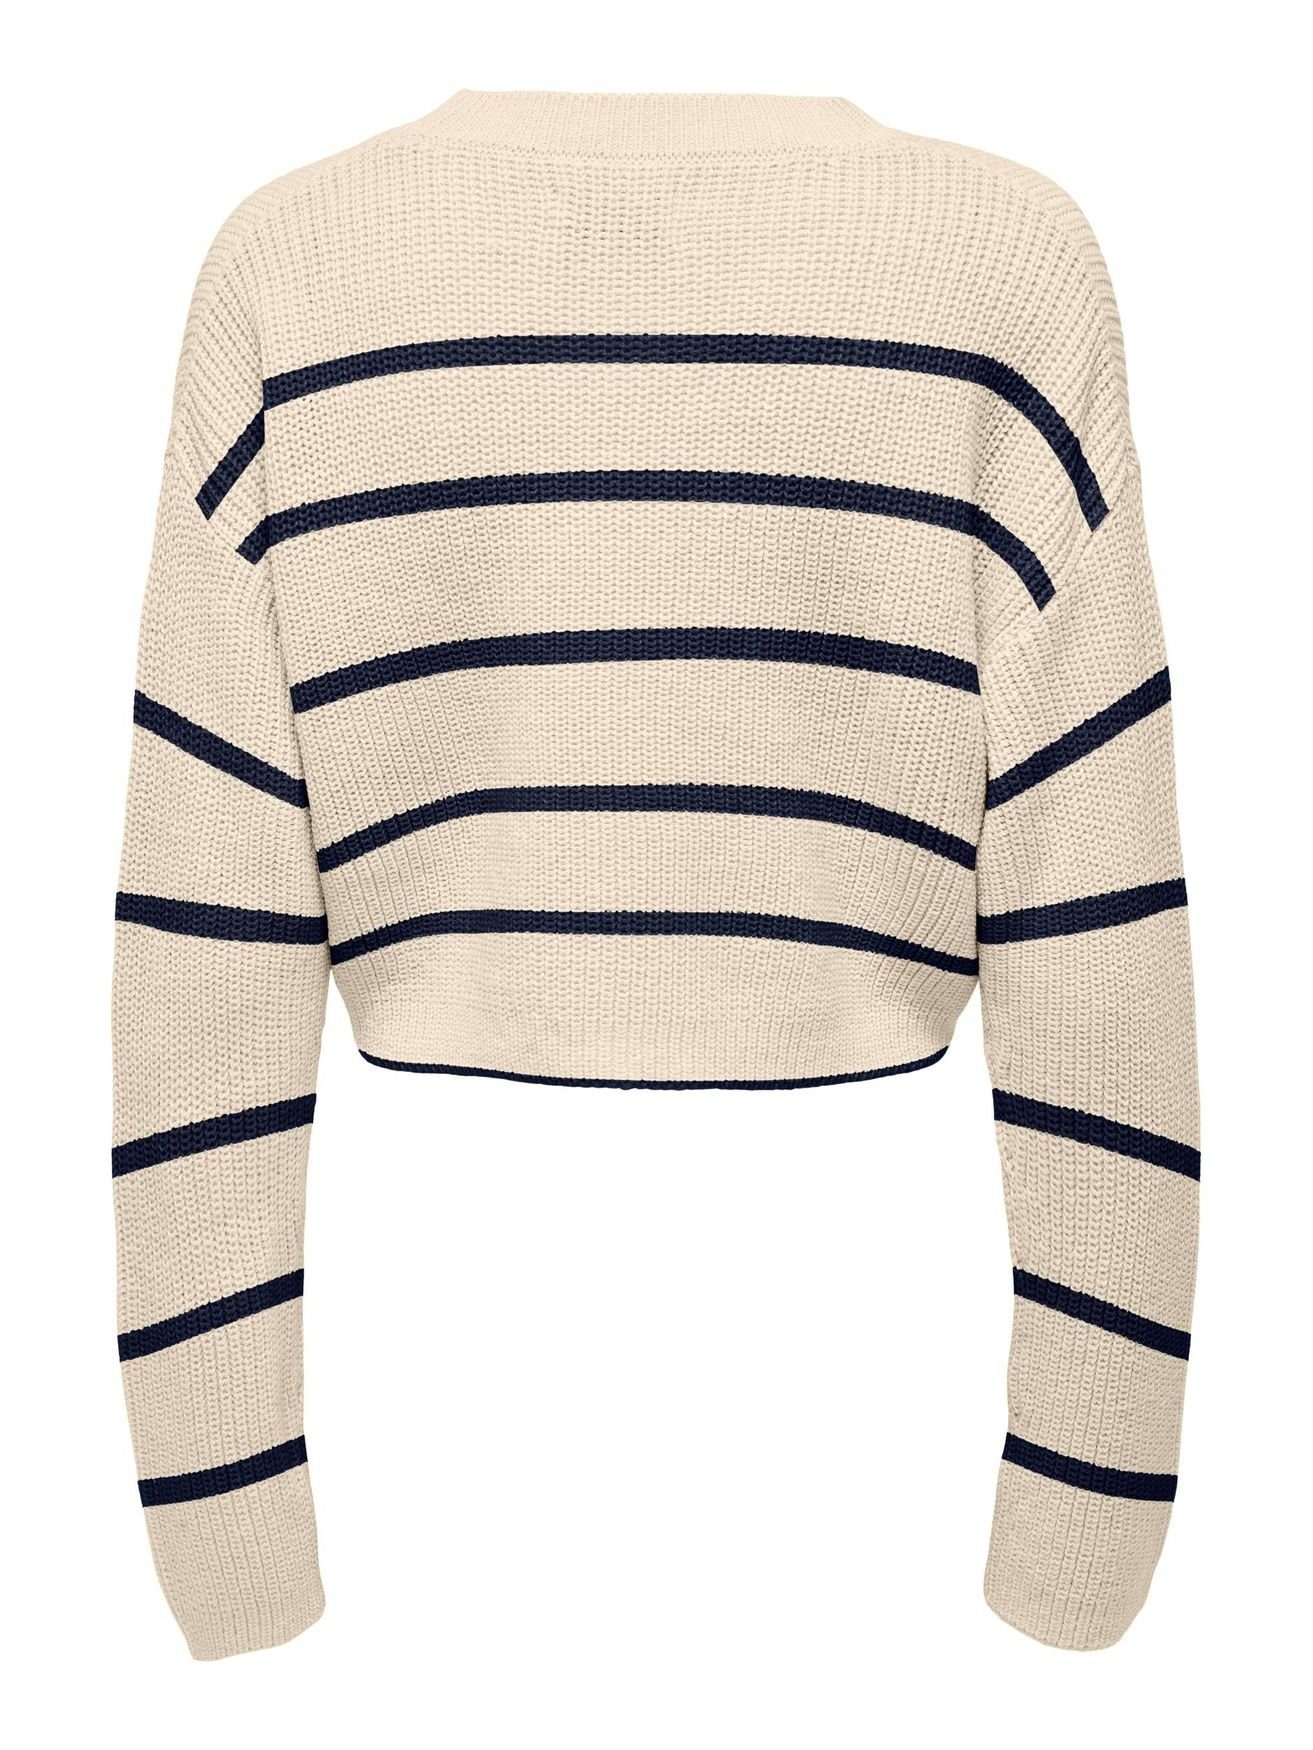 Cropped Beige-2 Sweater ONLMALAVI 4579 in ONLY Kurzer Langarm Strickpullover Rippstrick Pullover